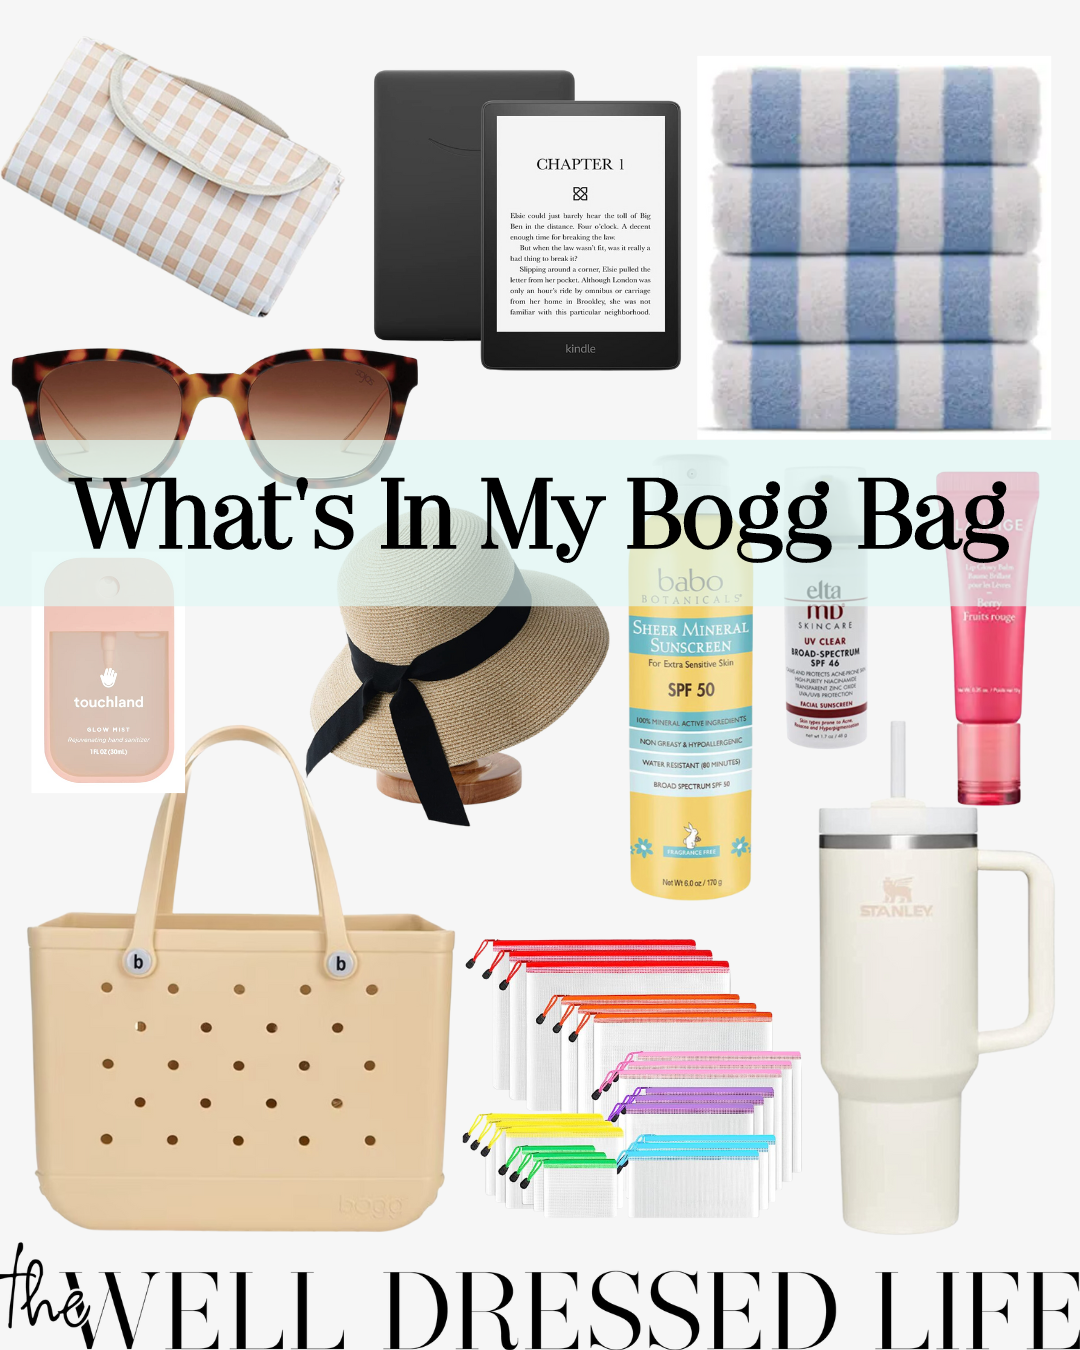 BOGG, Original & Baby Bogg Packing & Comparison!